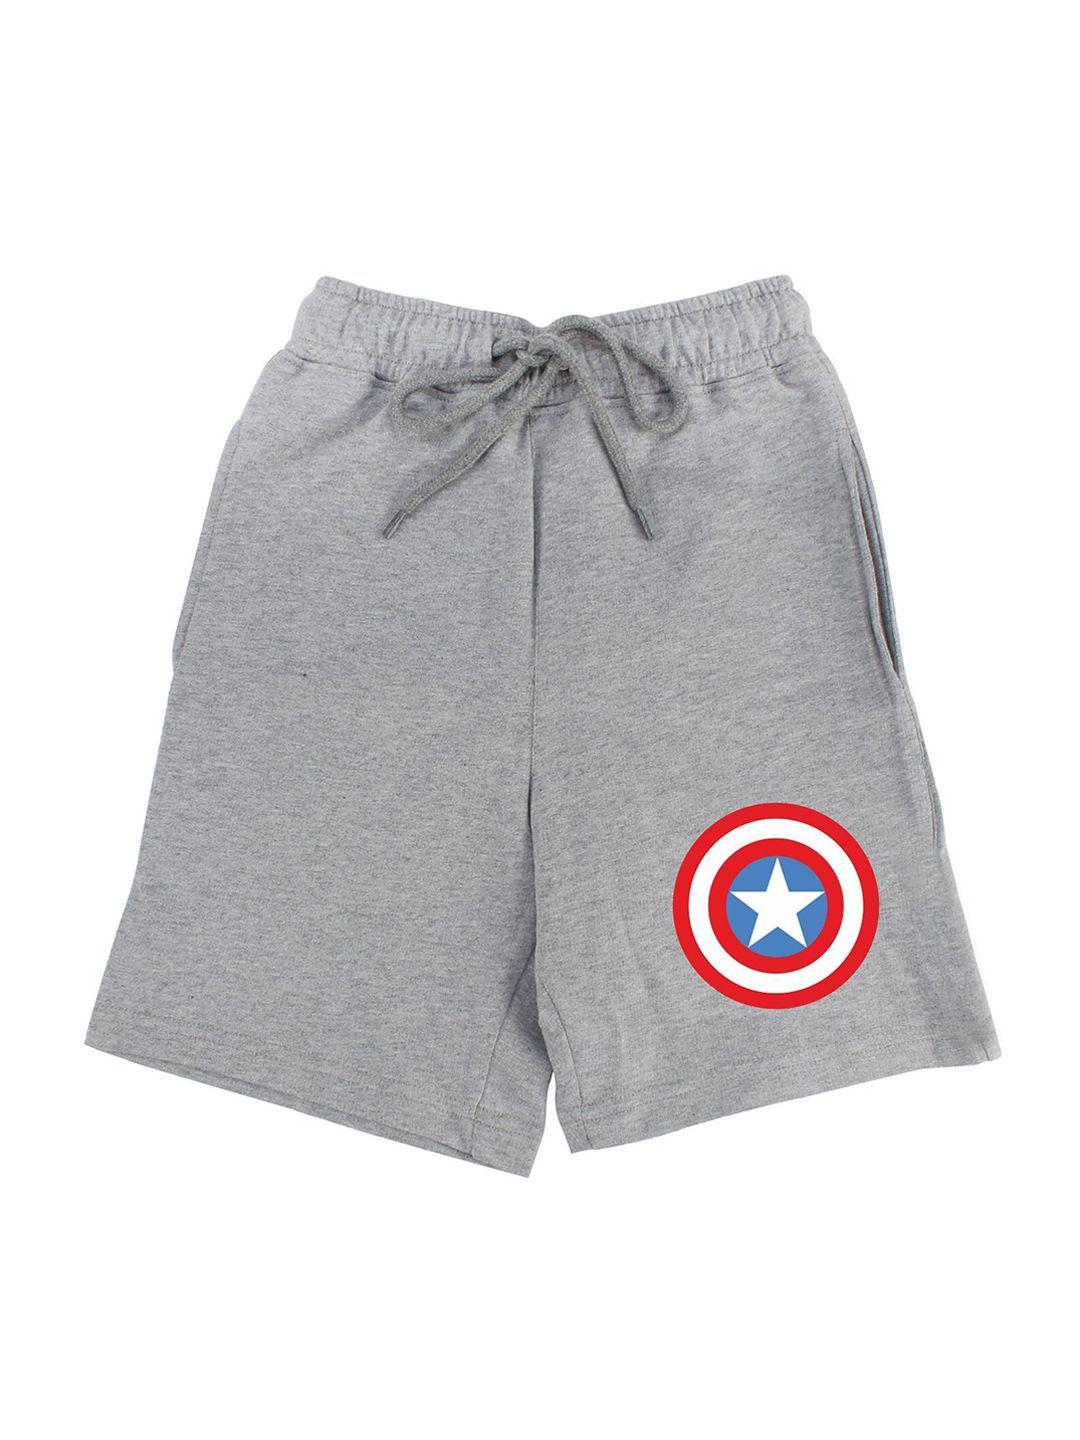 marvel by wear your mind boys grey superhero printed captain america shorts